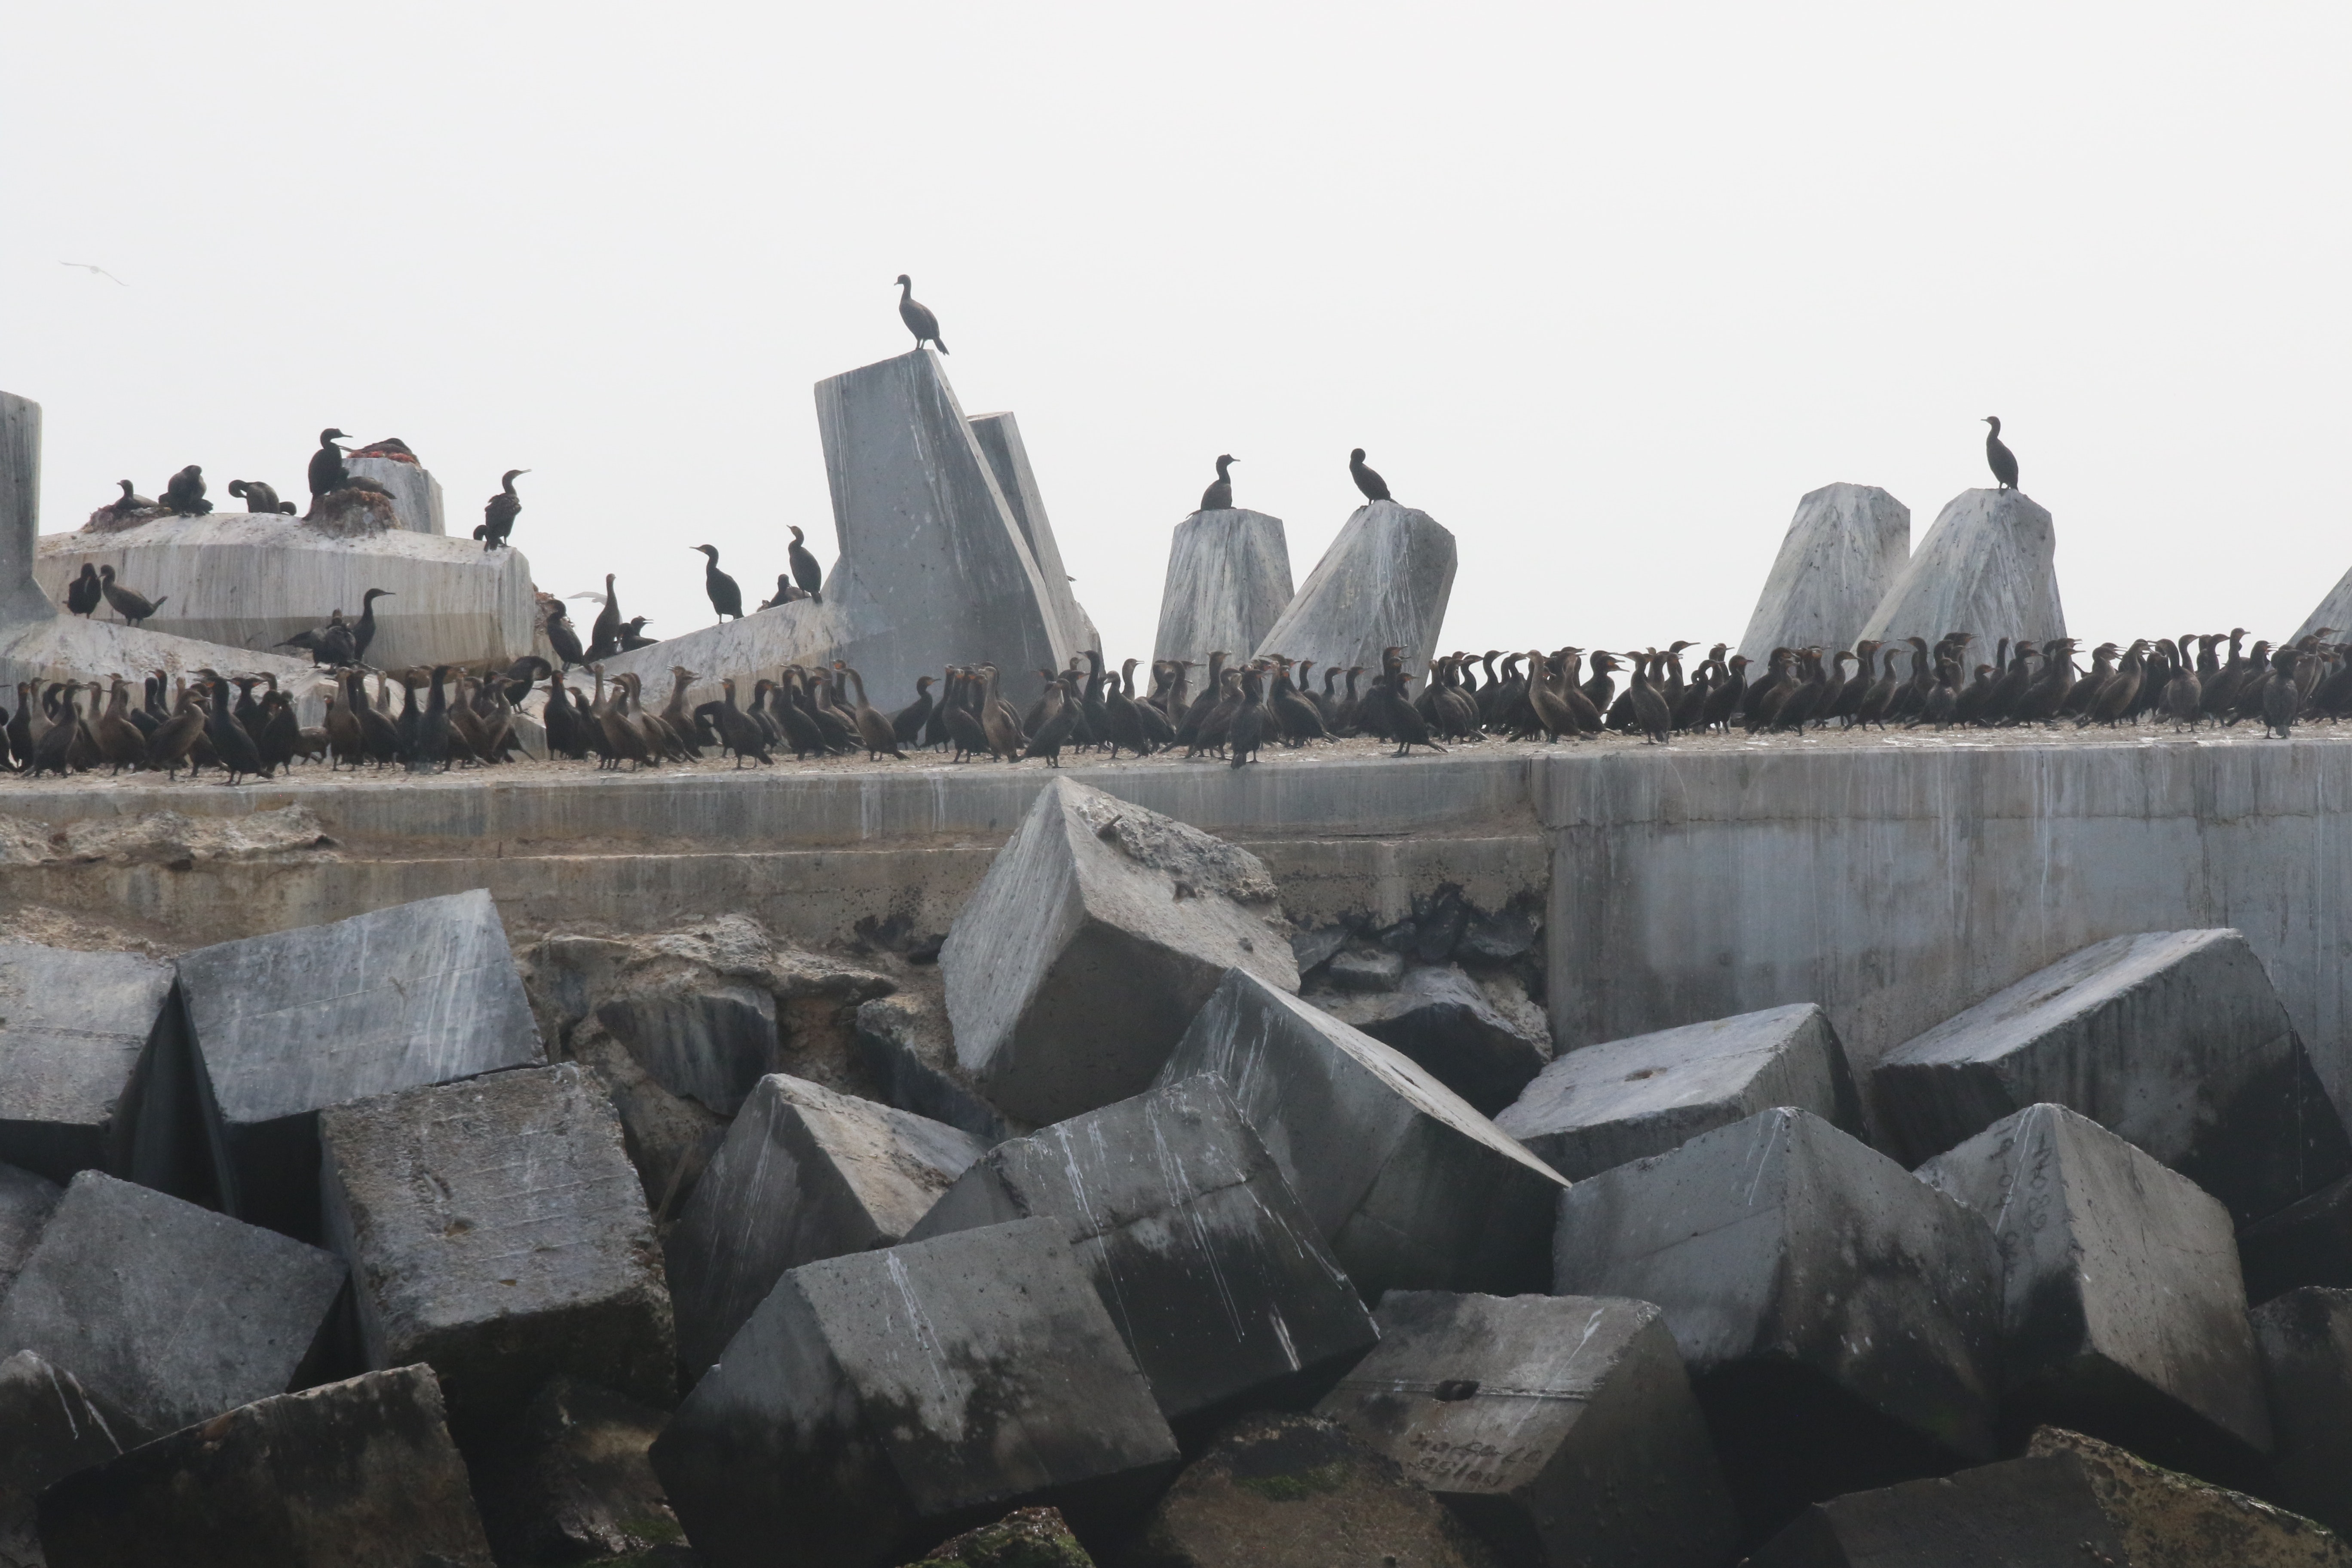 Flock of birds on concrete blocks, Flock of birds on concrete blocks